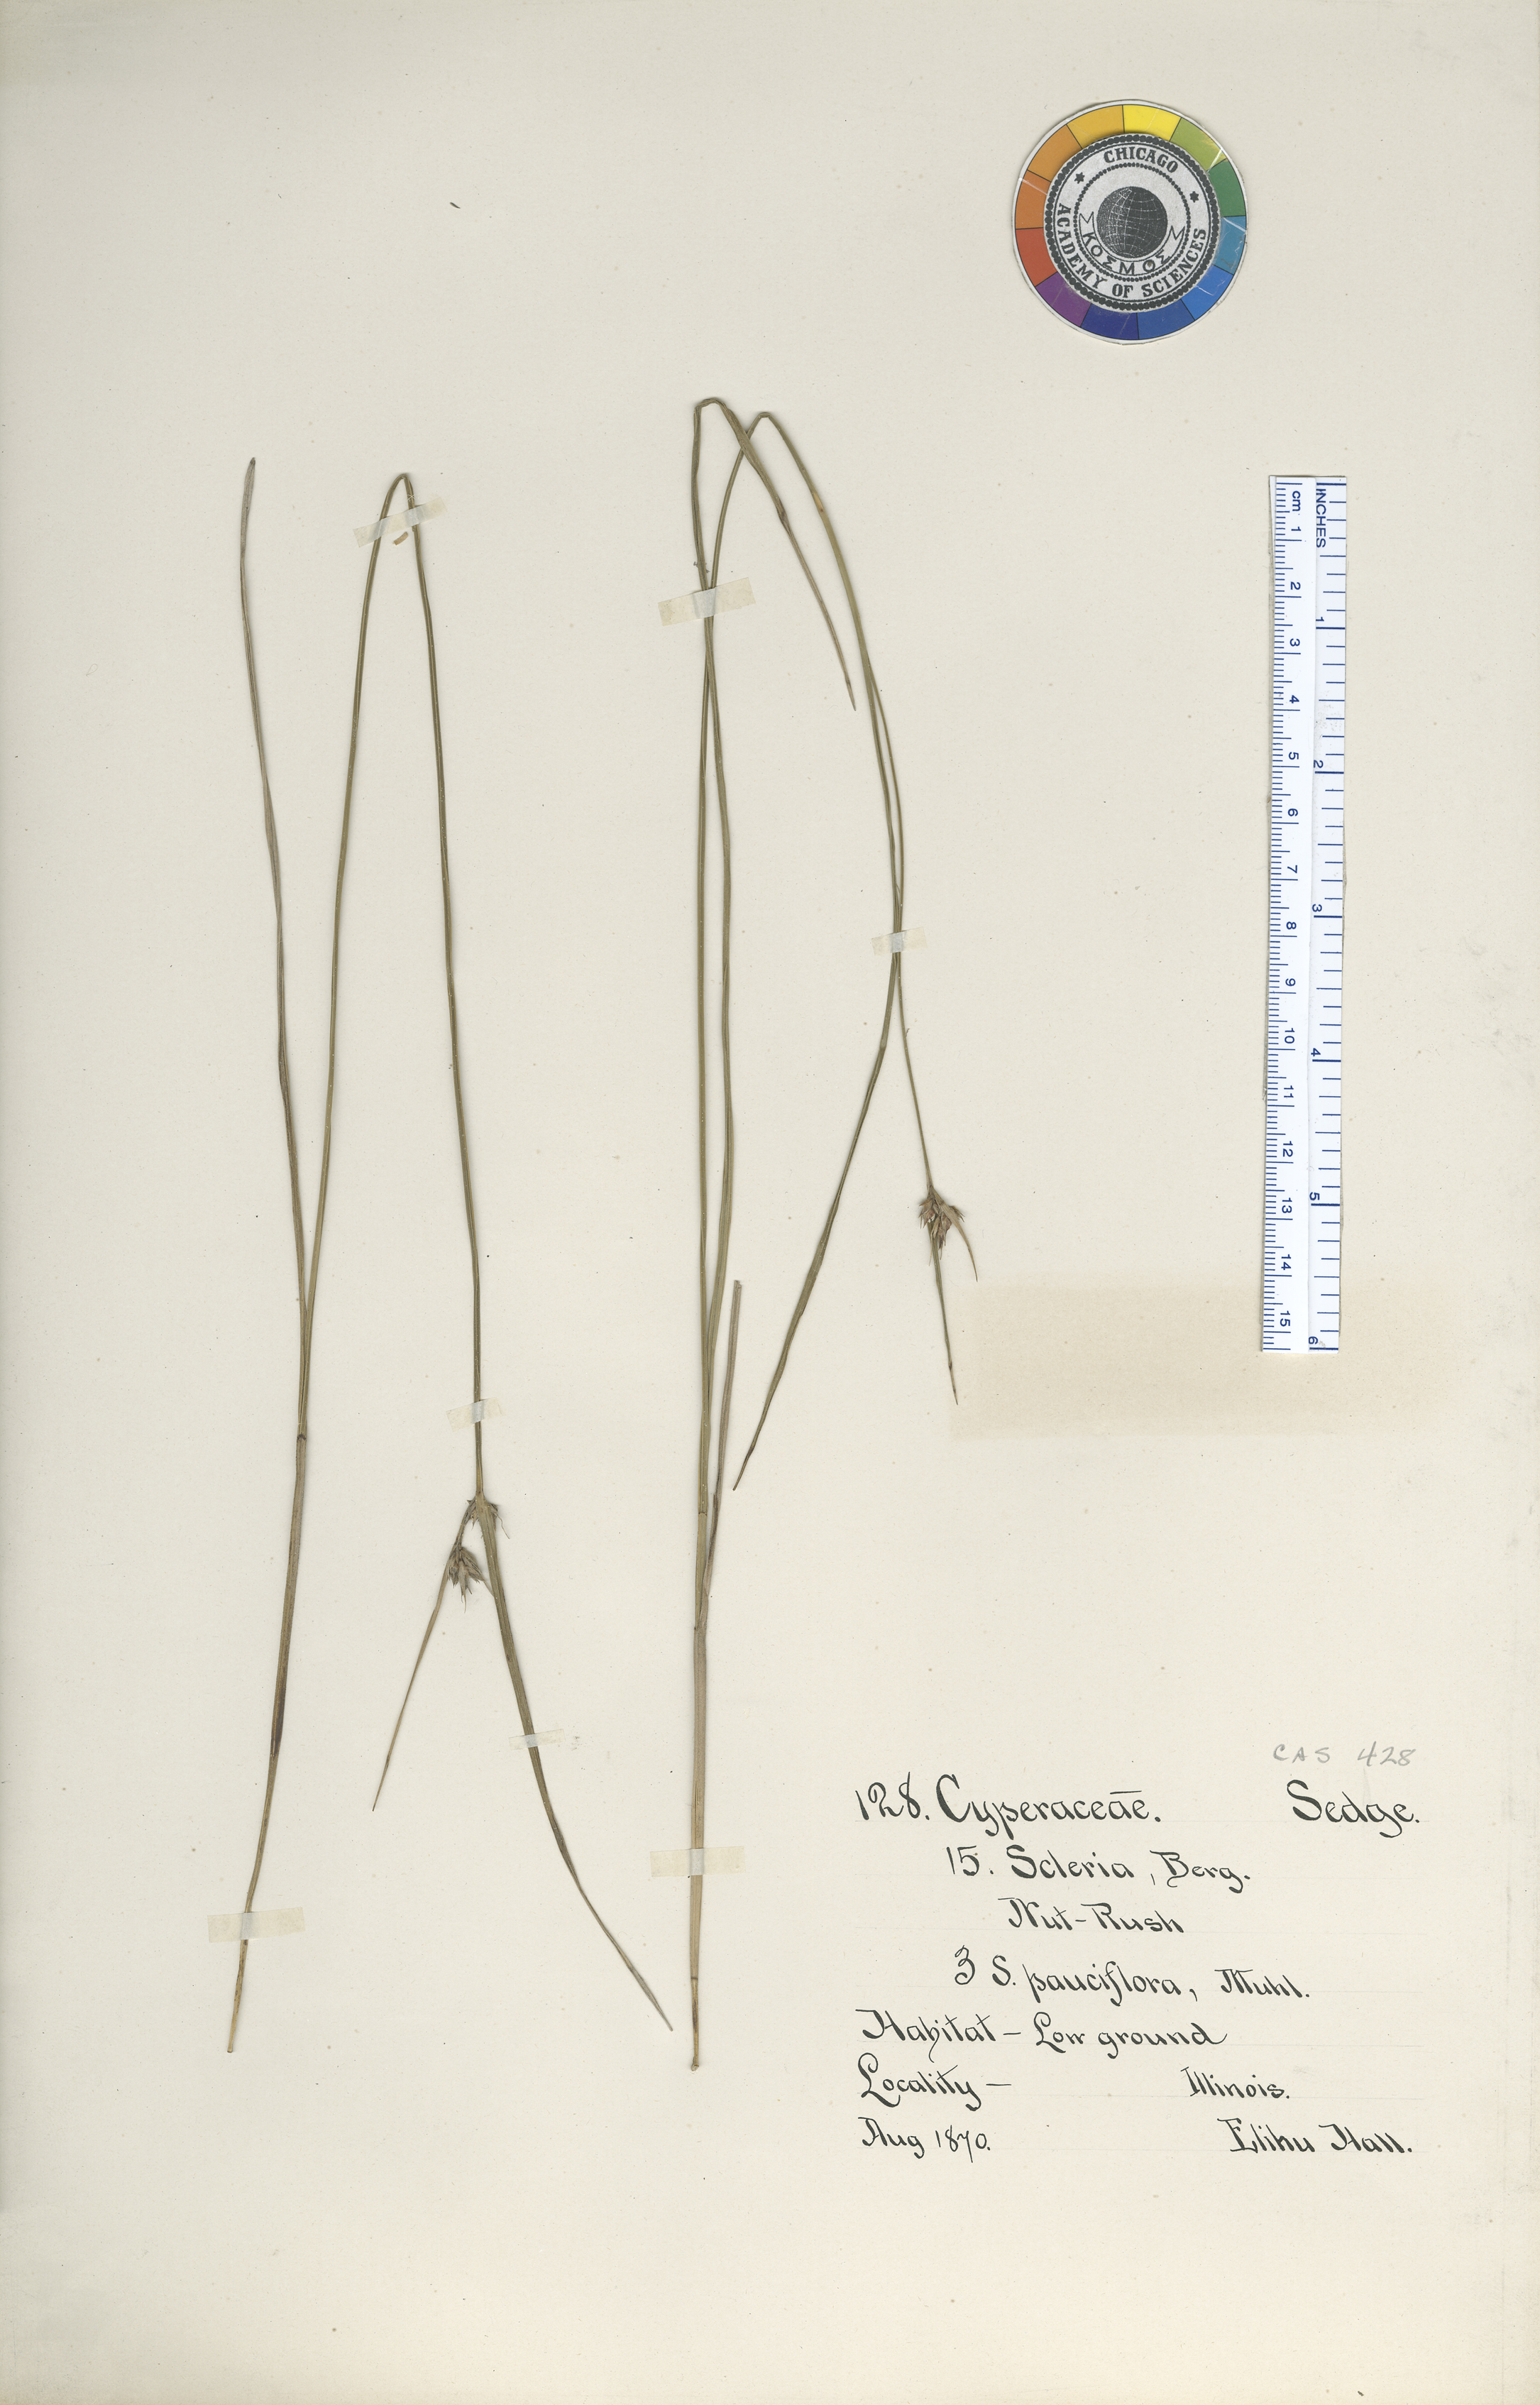 Scleria pauciflora var. kansana image